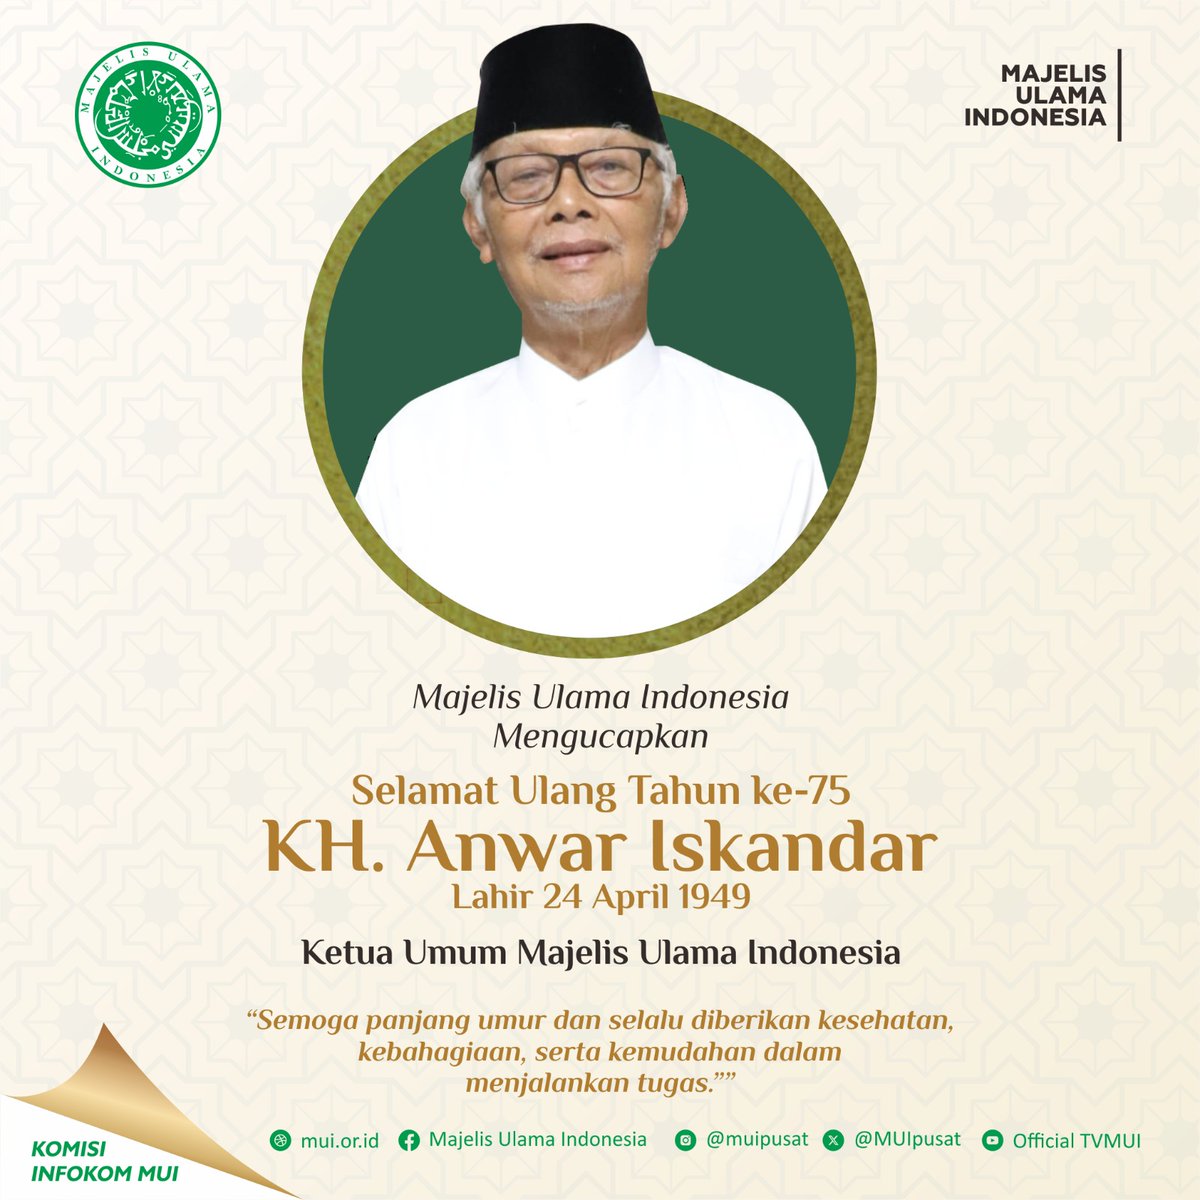 Majelis Ulama Indonesia Mengucapkan Selamat Ulang Tahun ke-75 KH. Anwar Iskandar (Ketua Umum Majelis Ulama Indonesia) Lahir 24 April 1949. Semoga panjang umur dan selalu diberikan kesehatan, kebahagiaan, serta kemudahan dalam menjalankan tugas. Aamiin. #mui #muipusat